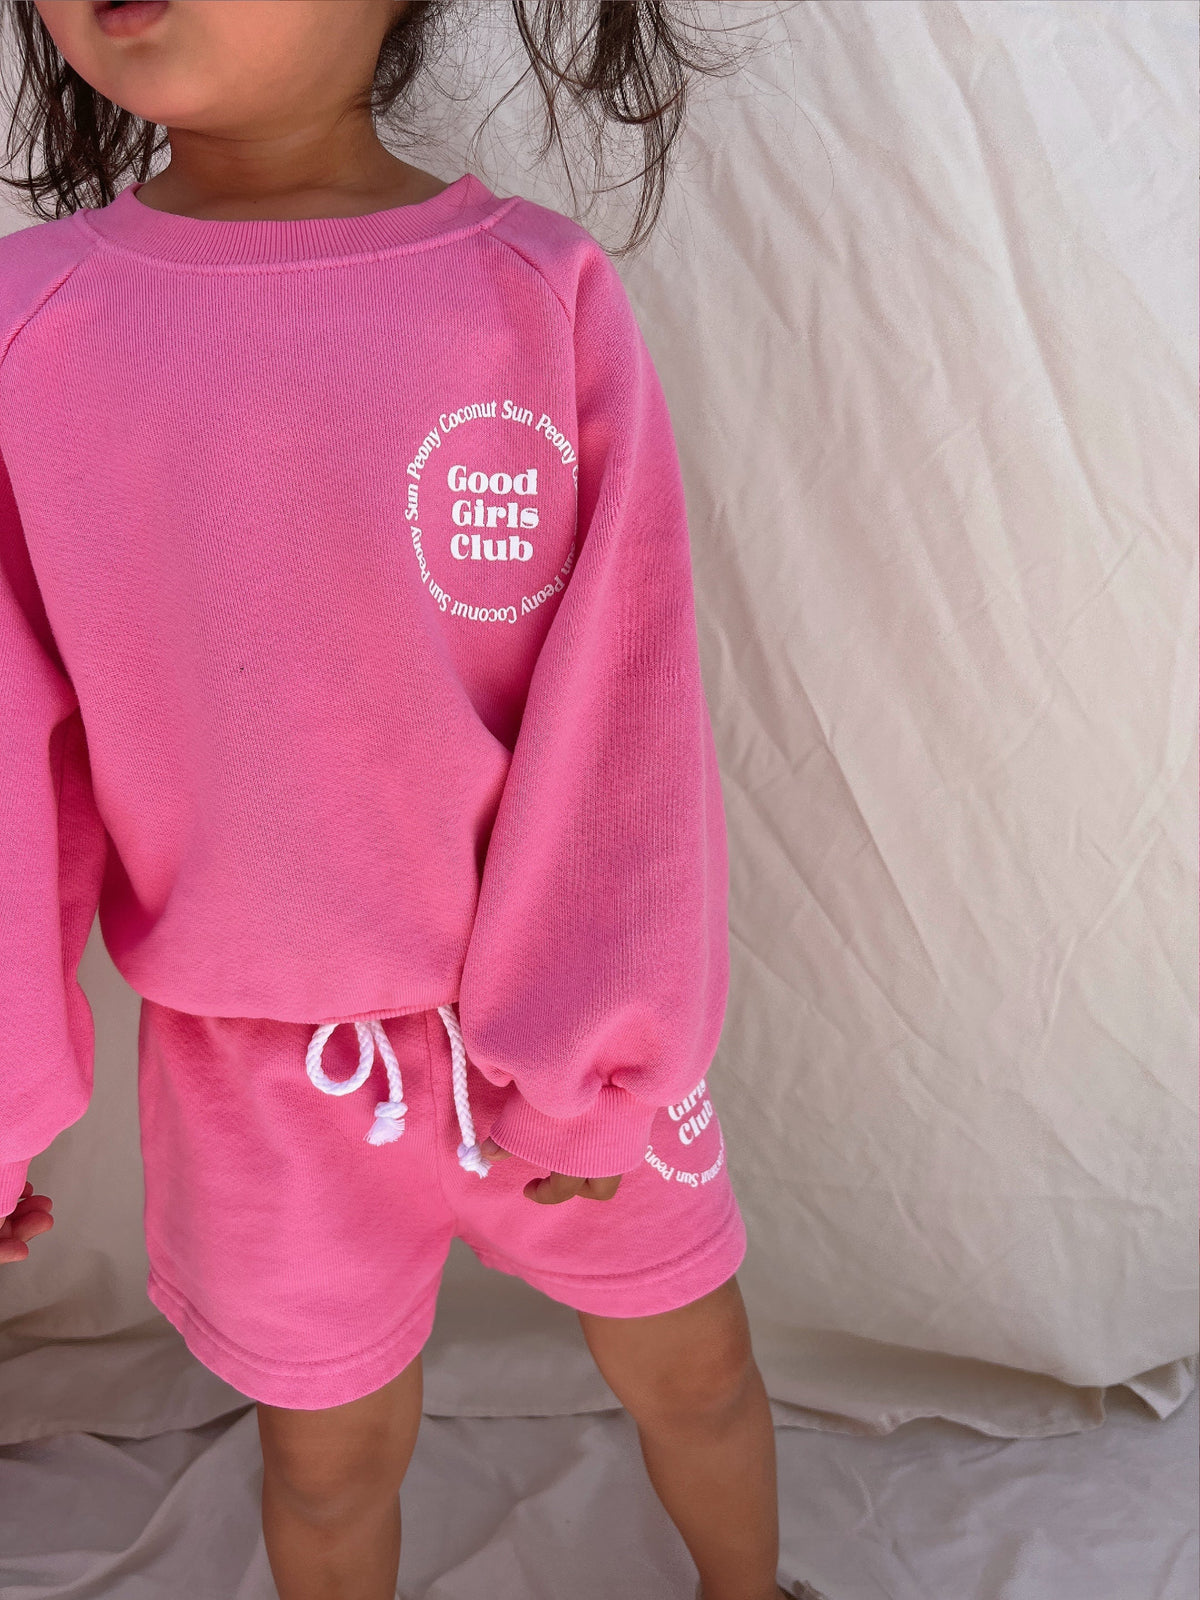 Sun Peony Coconut | Good Girls Club Sweatshirt in Pink